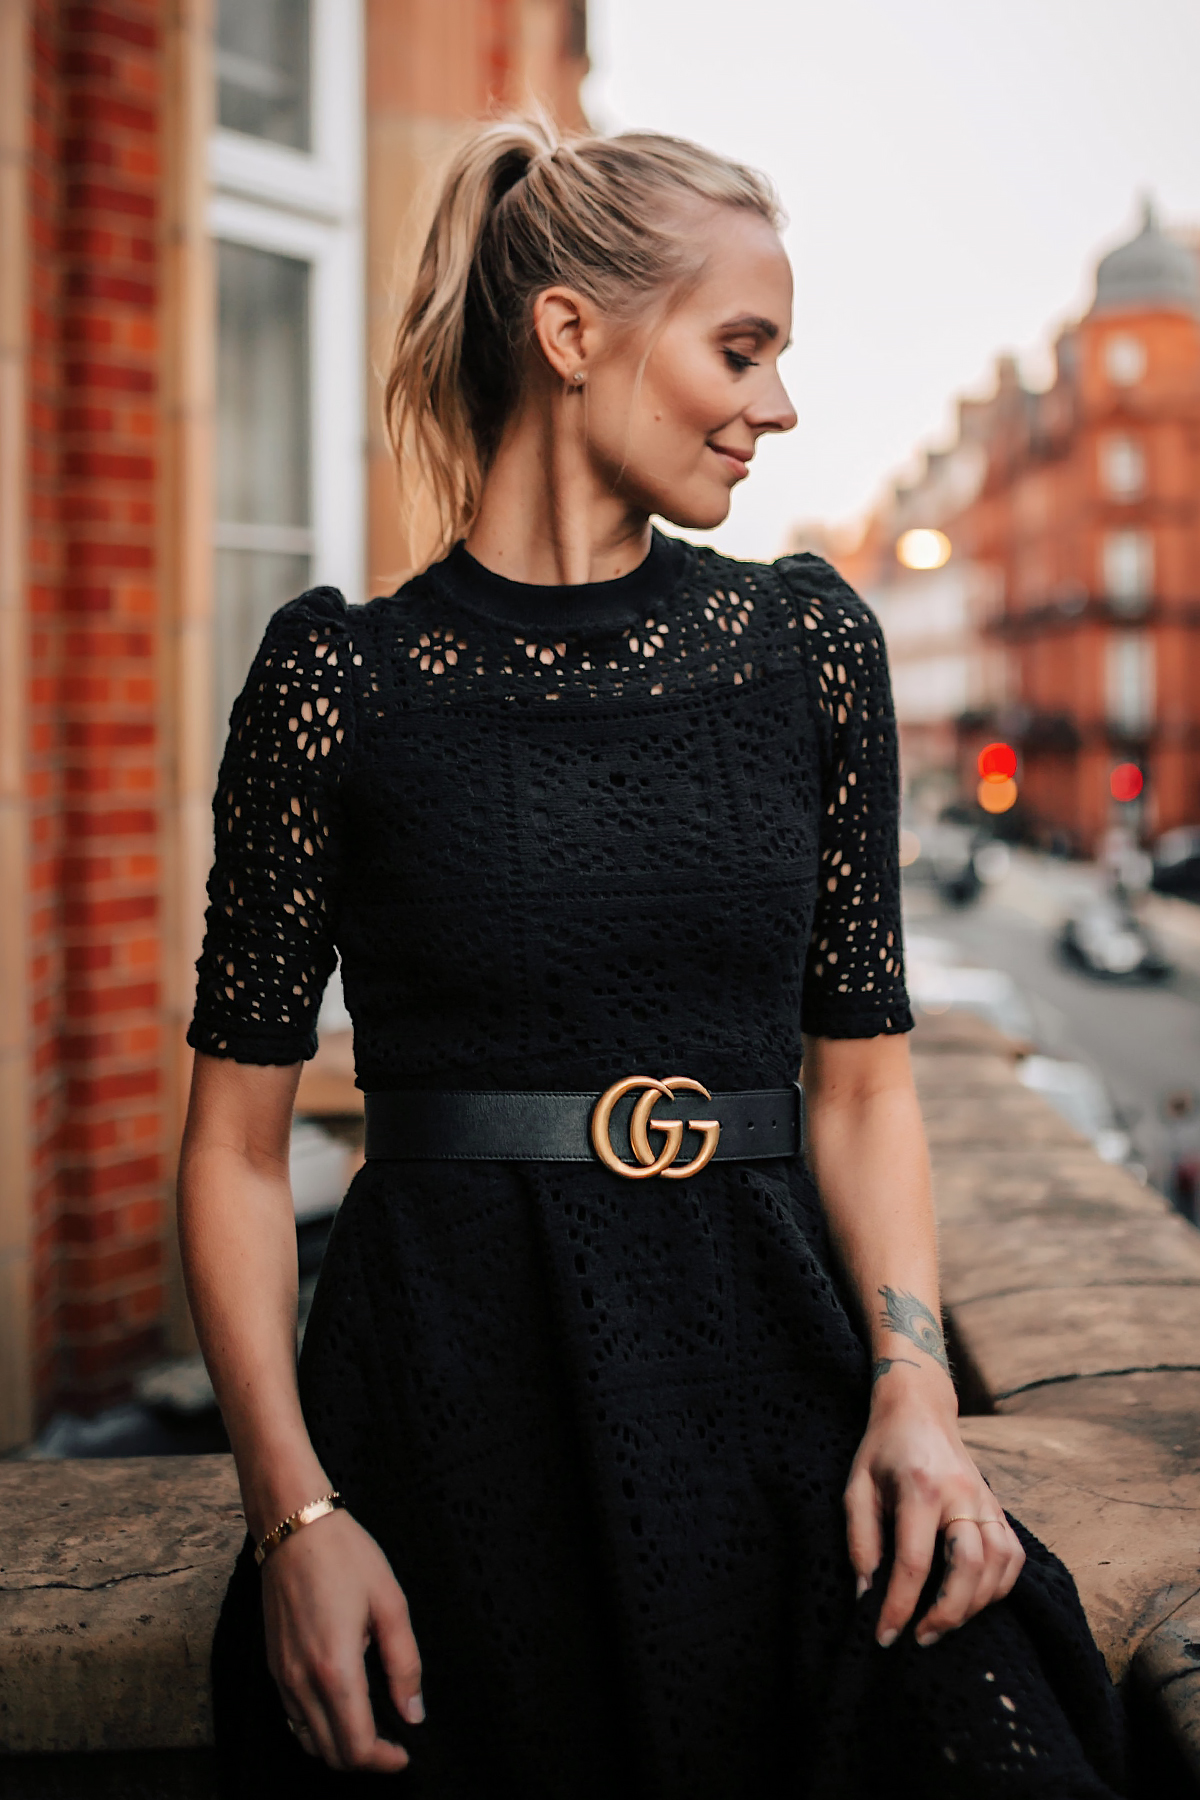 Blonde Women Wearing Black Lace Dress with Gucci Belt on London Balcony